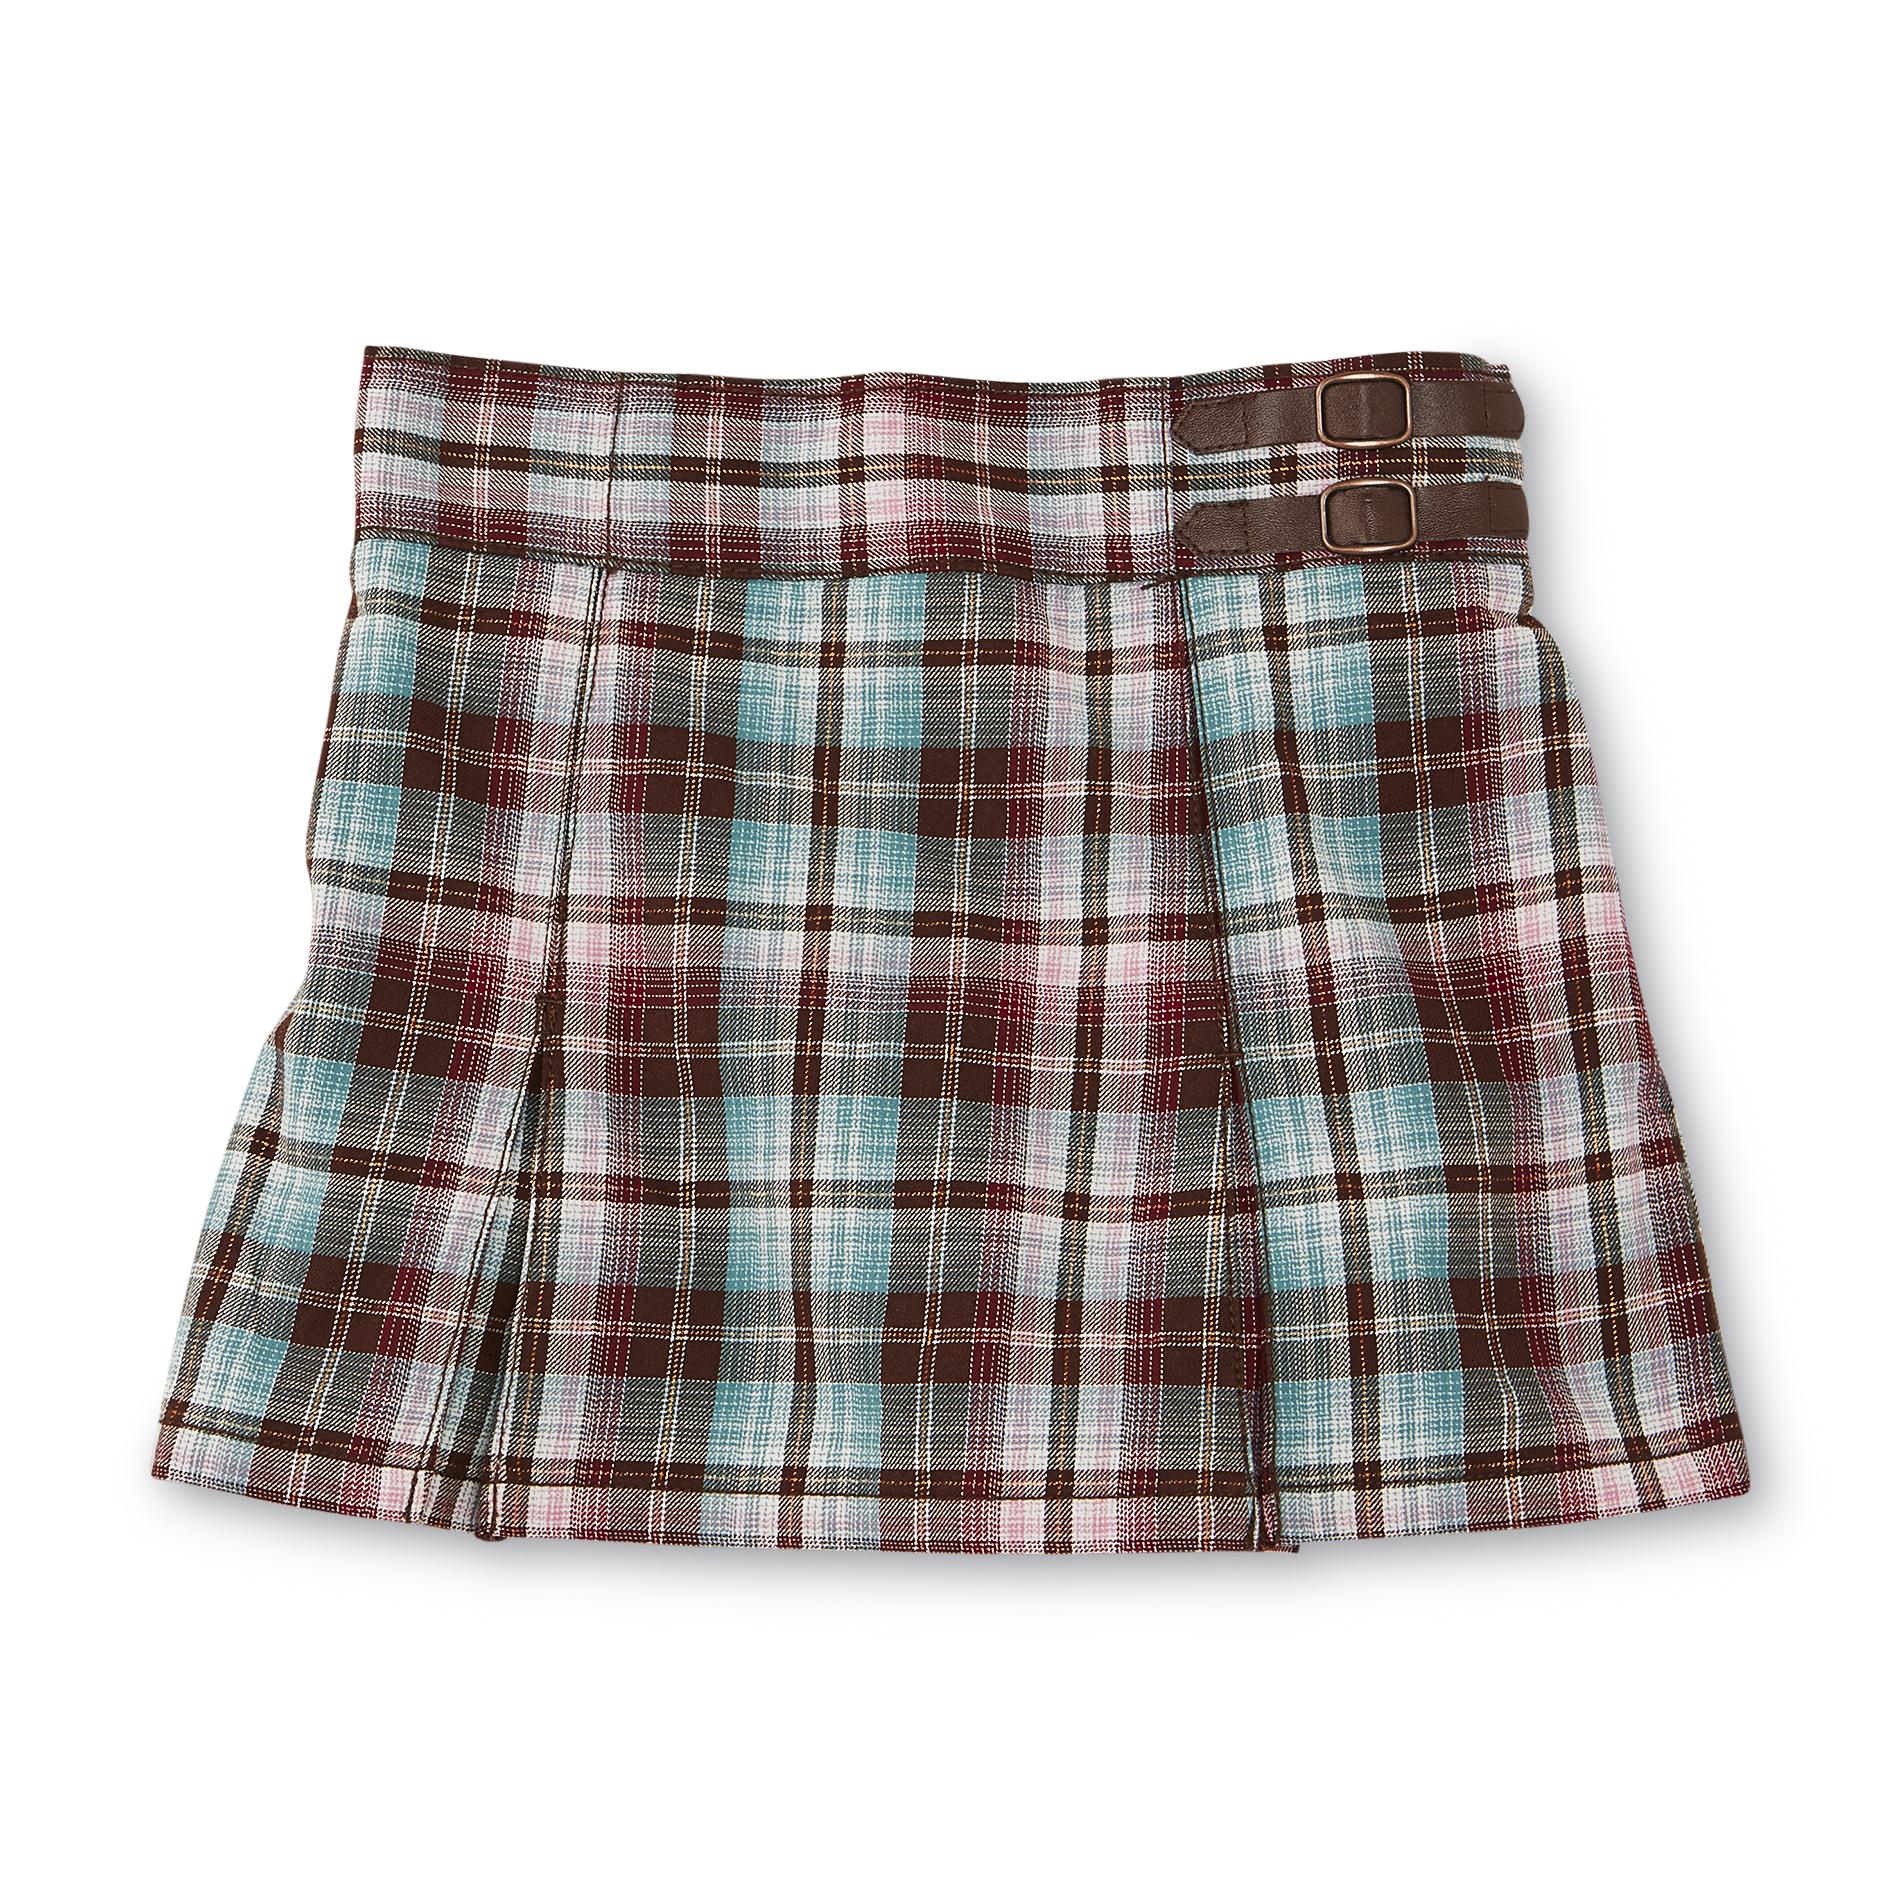 Toughskins Girl's Woven Skirt - Plaid